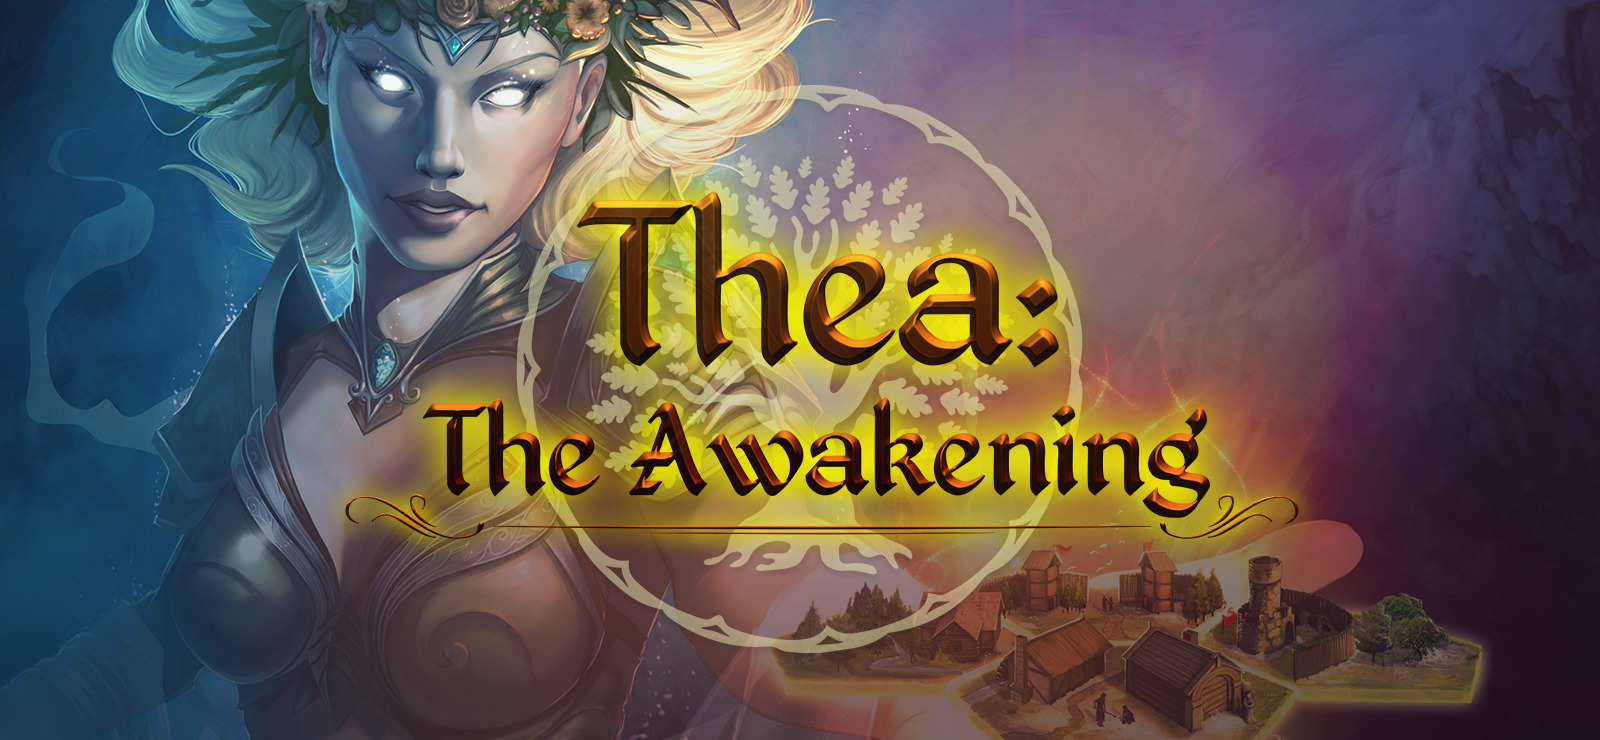 Thea the awakening. The Awakening игра. Тея the Awakening. Thea: the Awakening / Тея: Пробуждение.